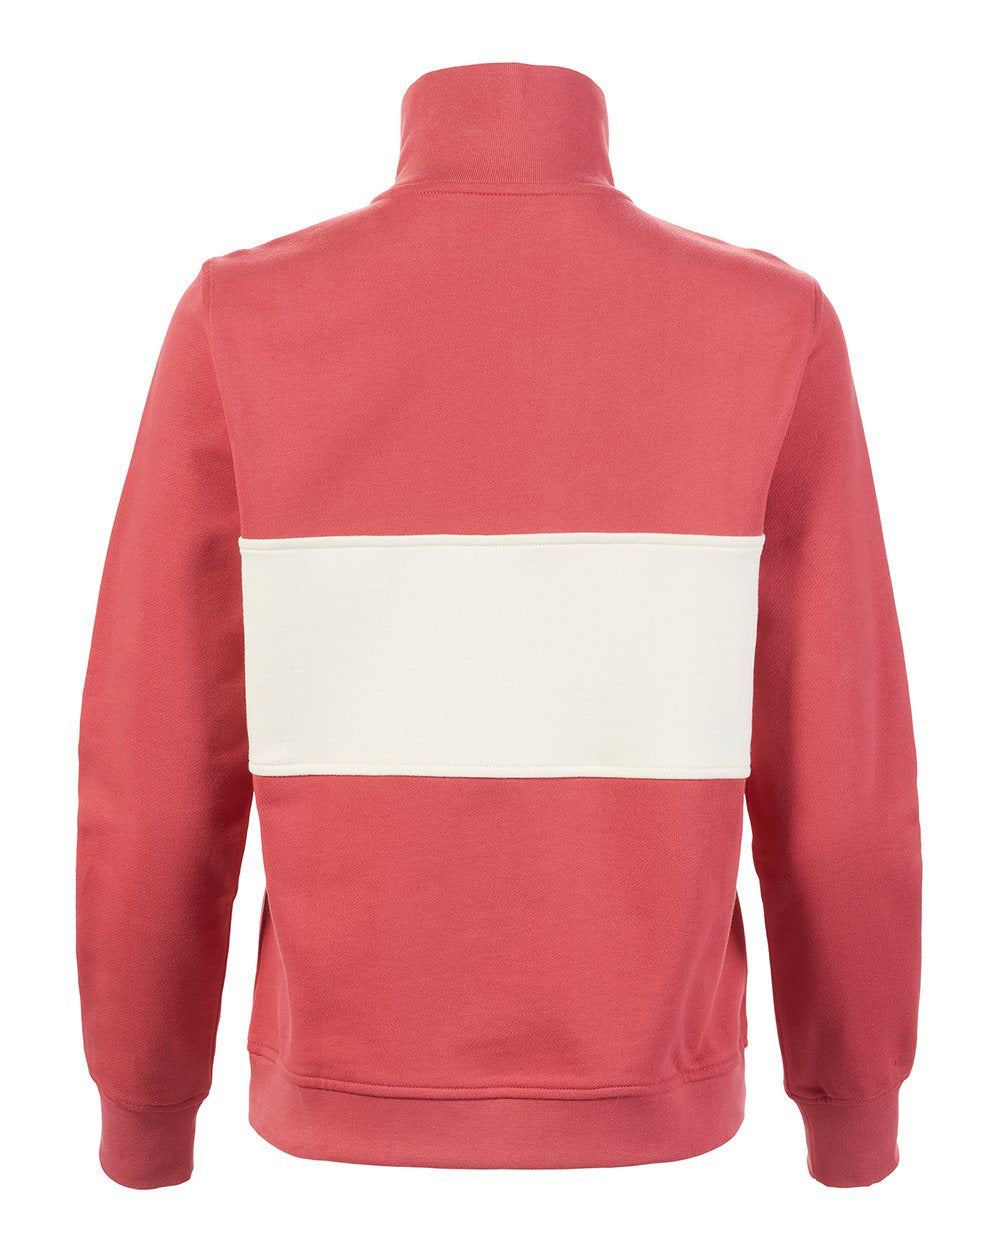 Sweet Raspberry Coloured Musto Womens Classic Half Zip Sweatshirt On A White Background 